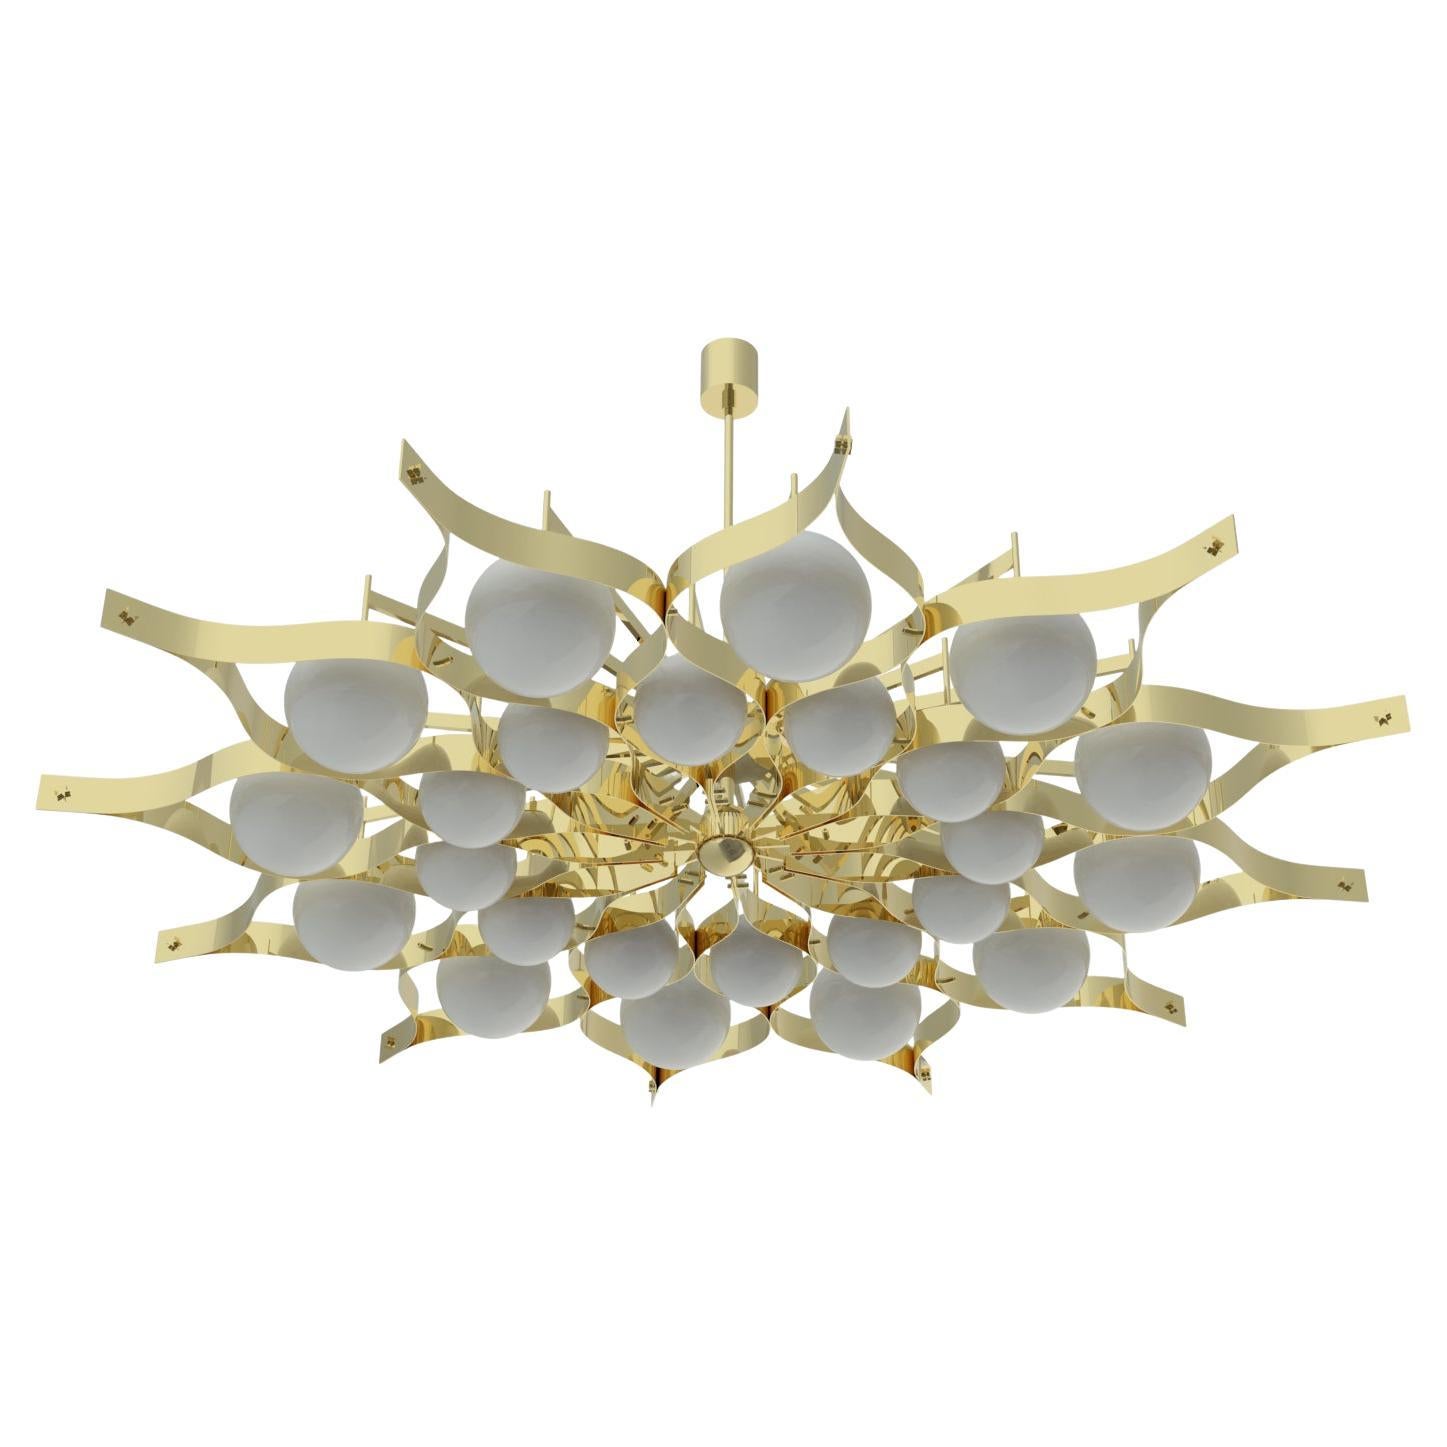 21st Century Pavone Large Pendant Lamp, DALI, Gio Ponti, 2019, Italy For Sale